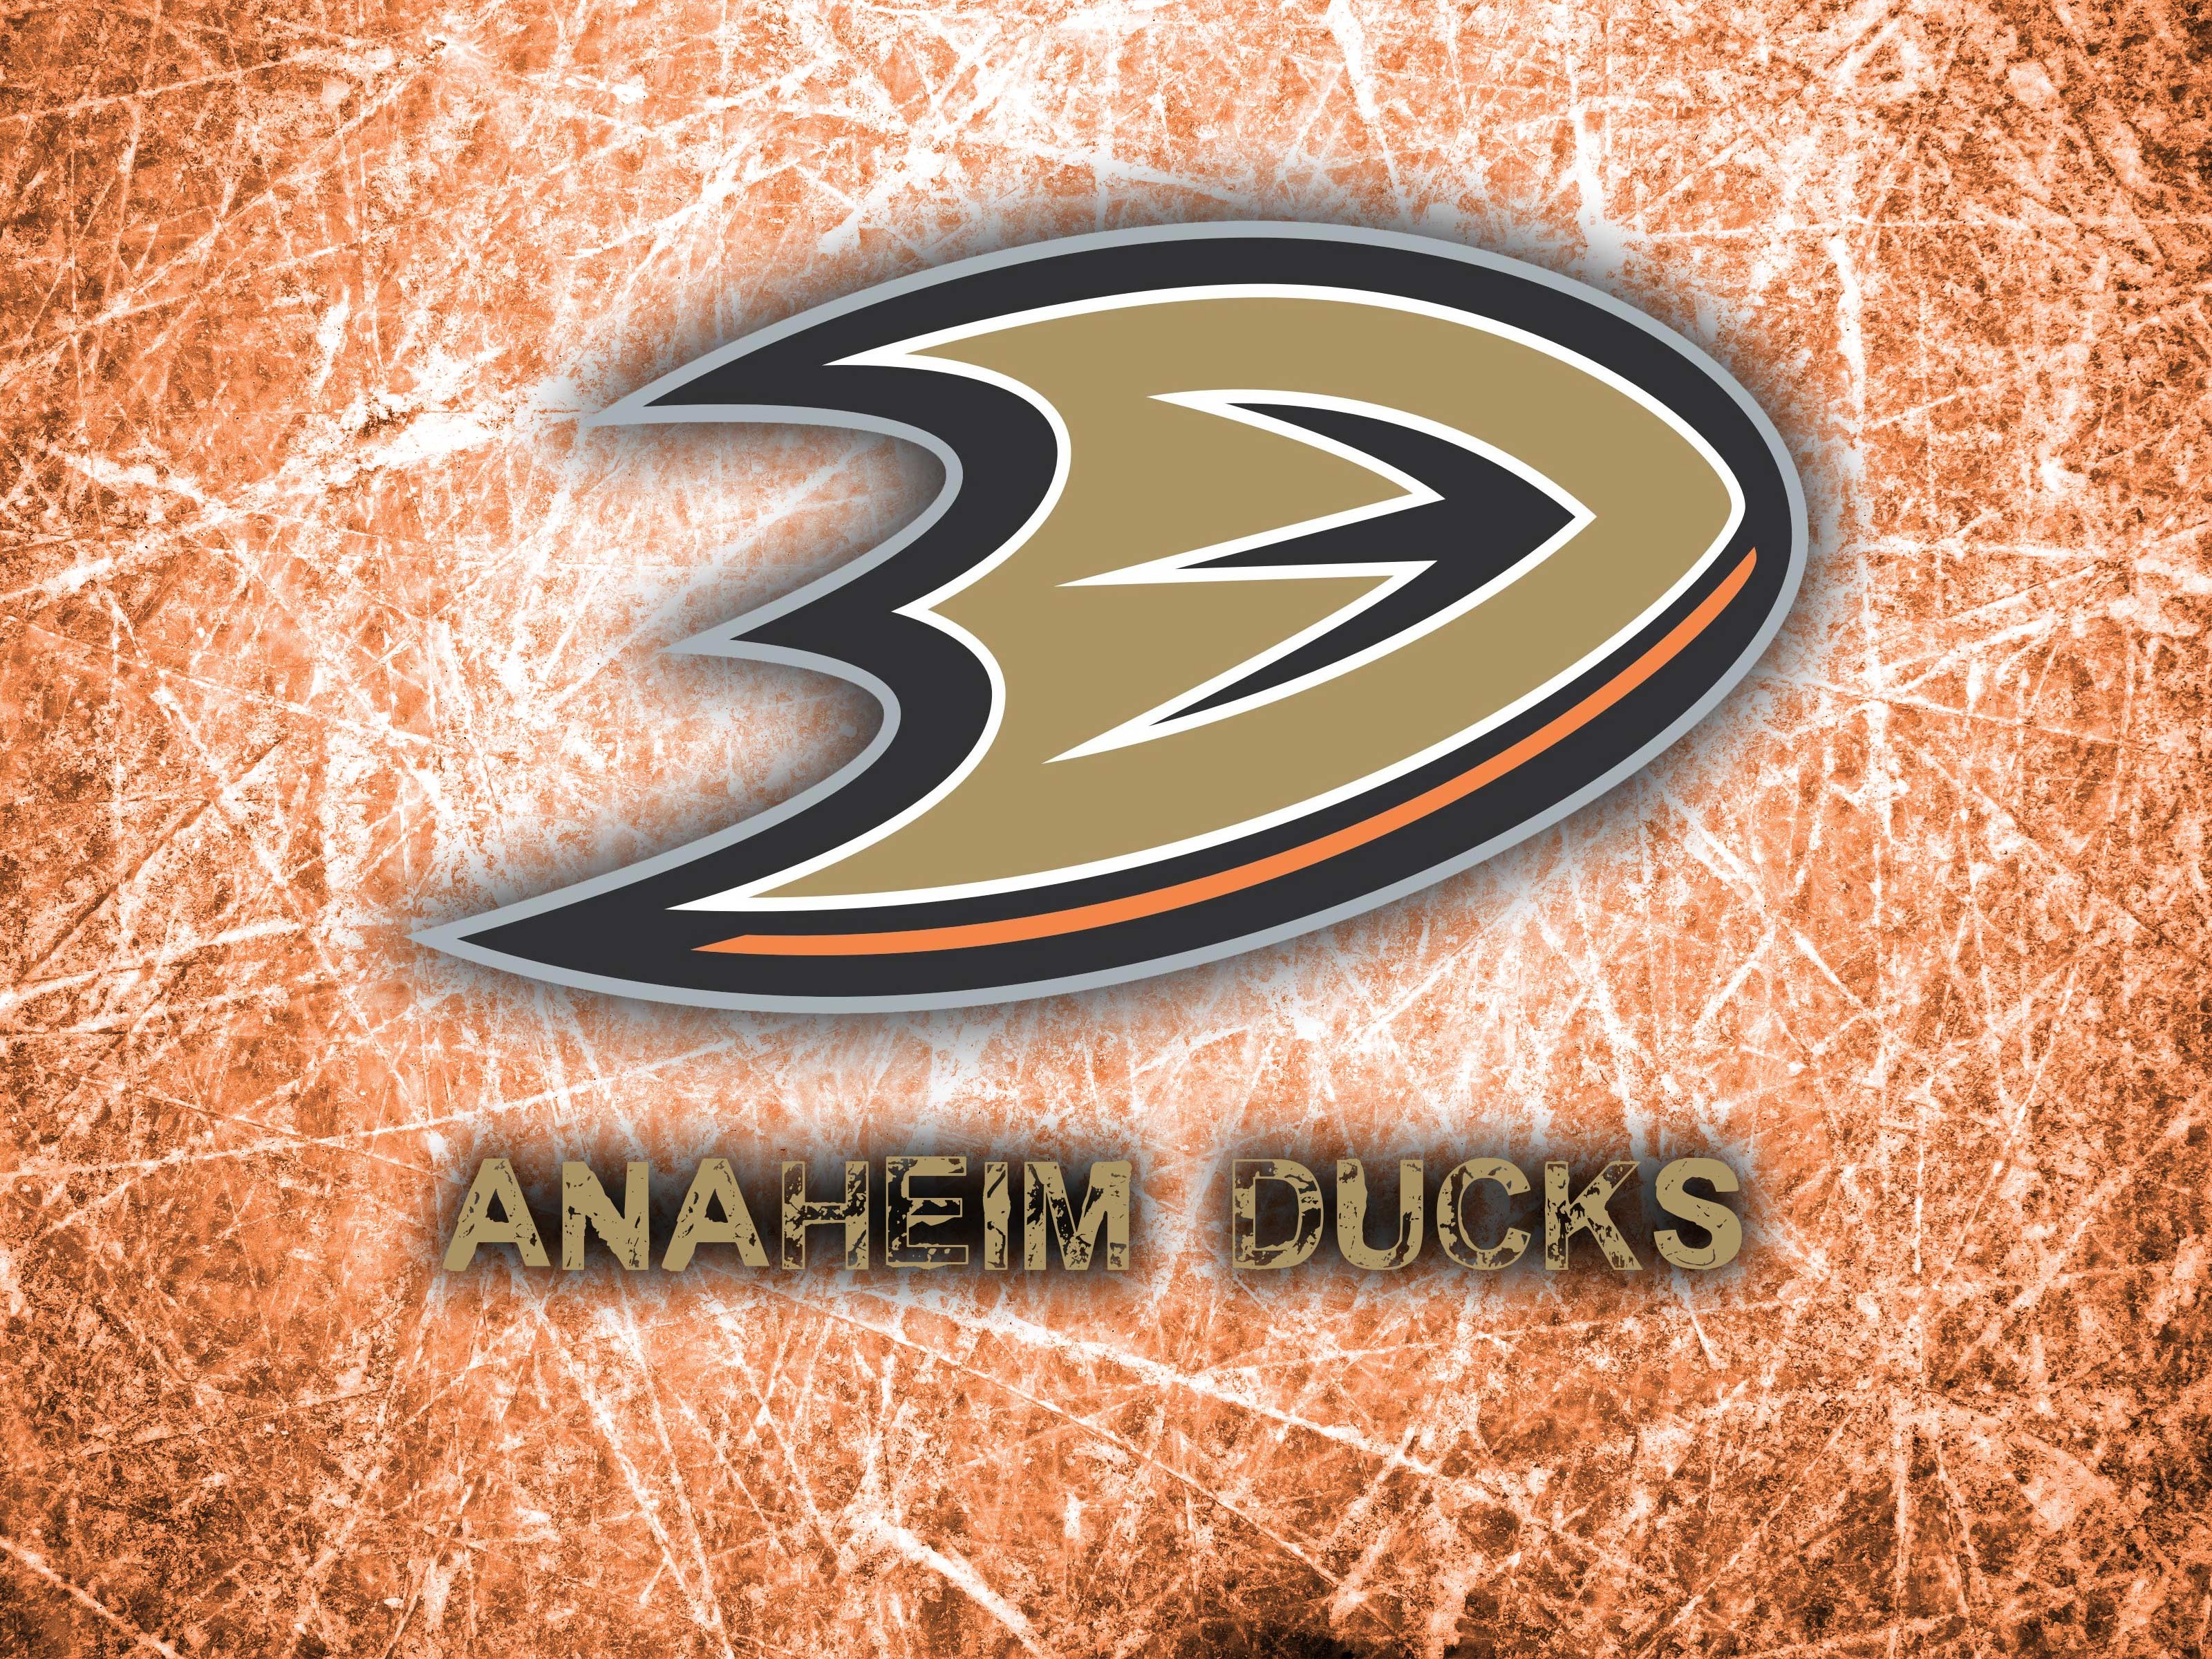 Excellent Anaheim Ducks Wallpaper Full HD Pictures